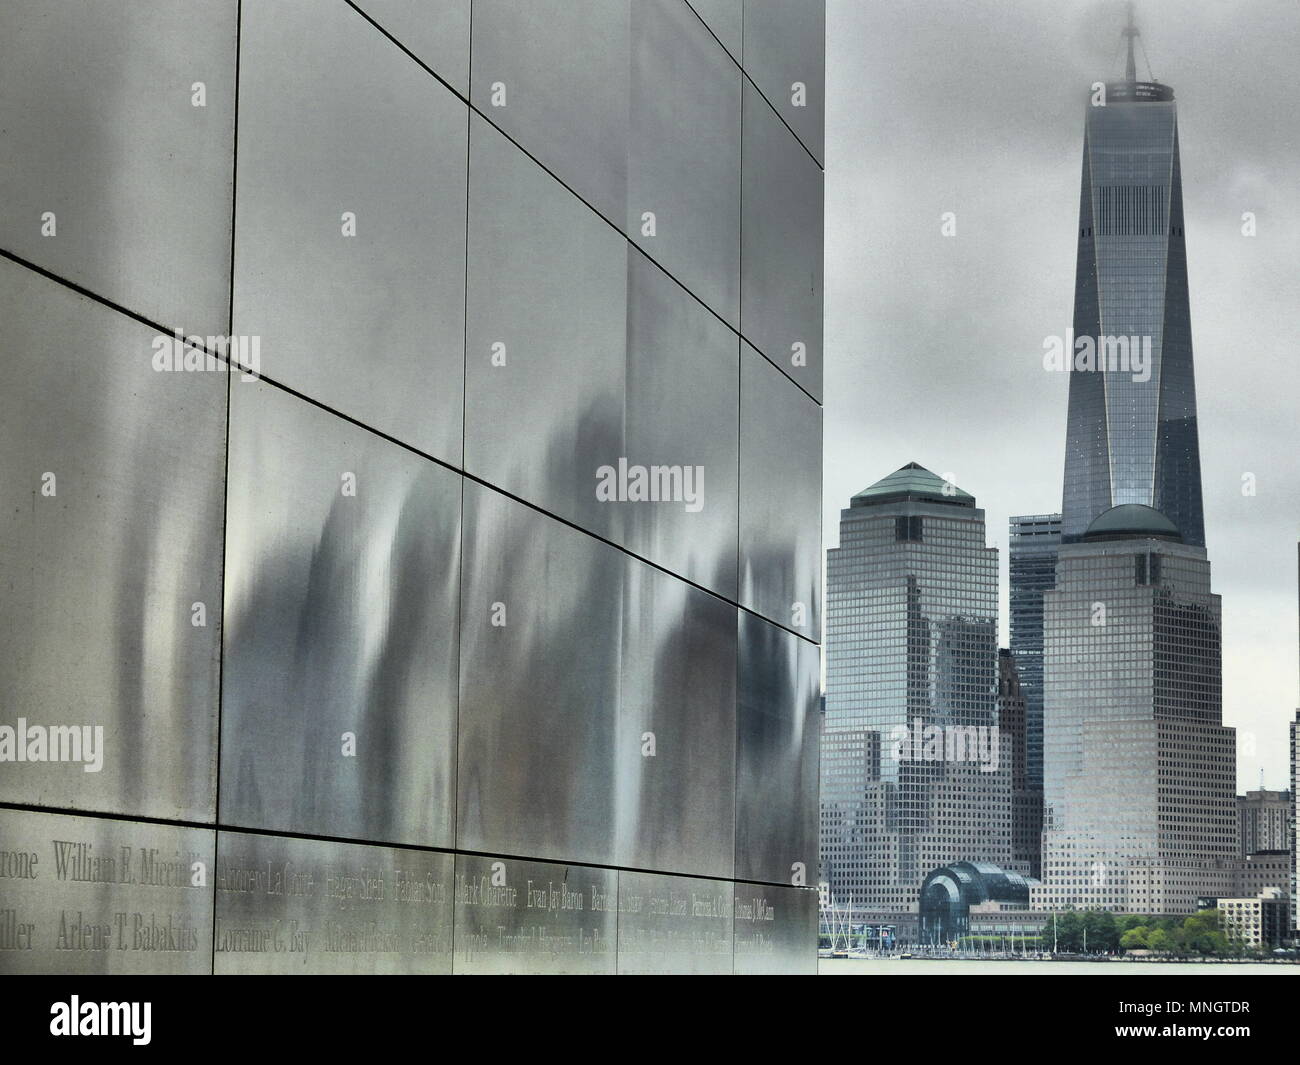 Memorial, 9/11 vittime, Open Sky Memorial, riflessione, fantasmi, attacco terroristico, 9/11, memorial,Manhattan, Freedom Tower, World Trade Center Foto Stock